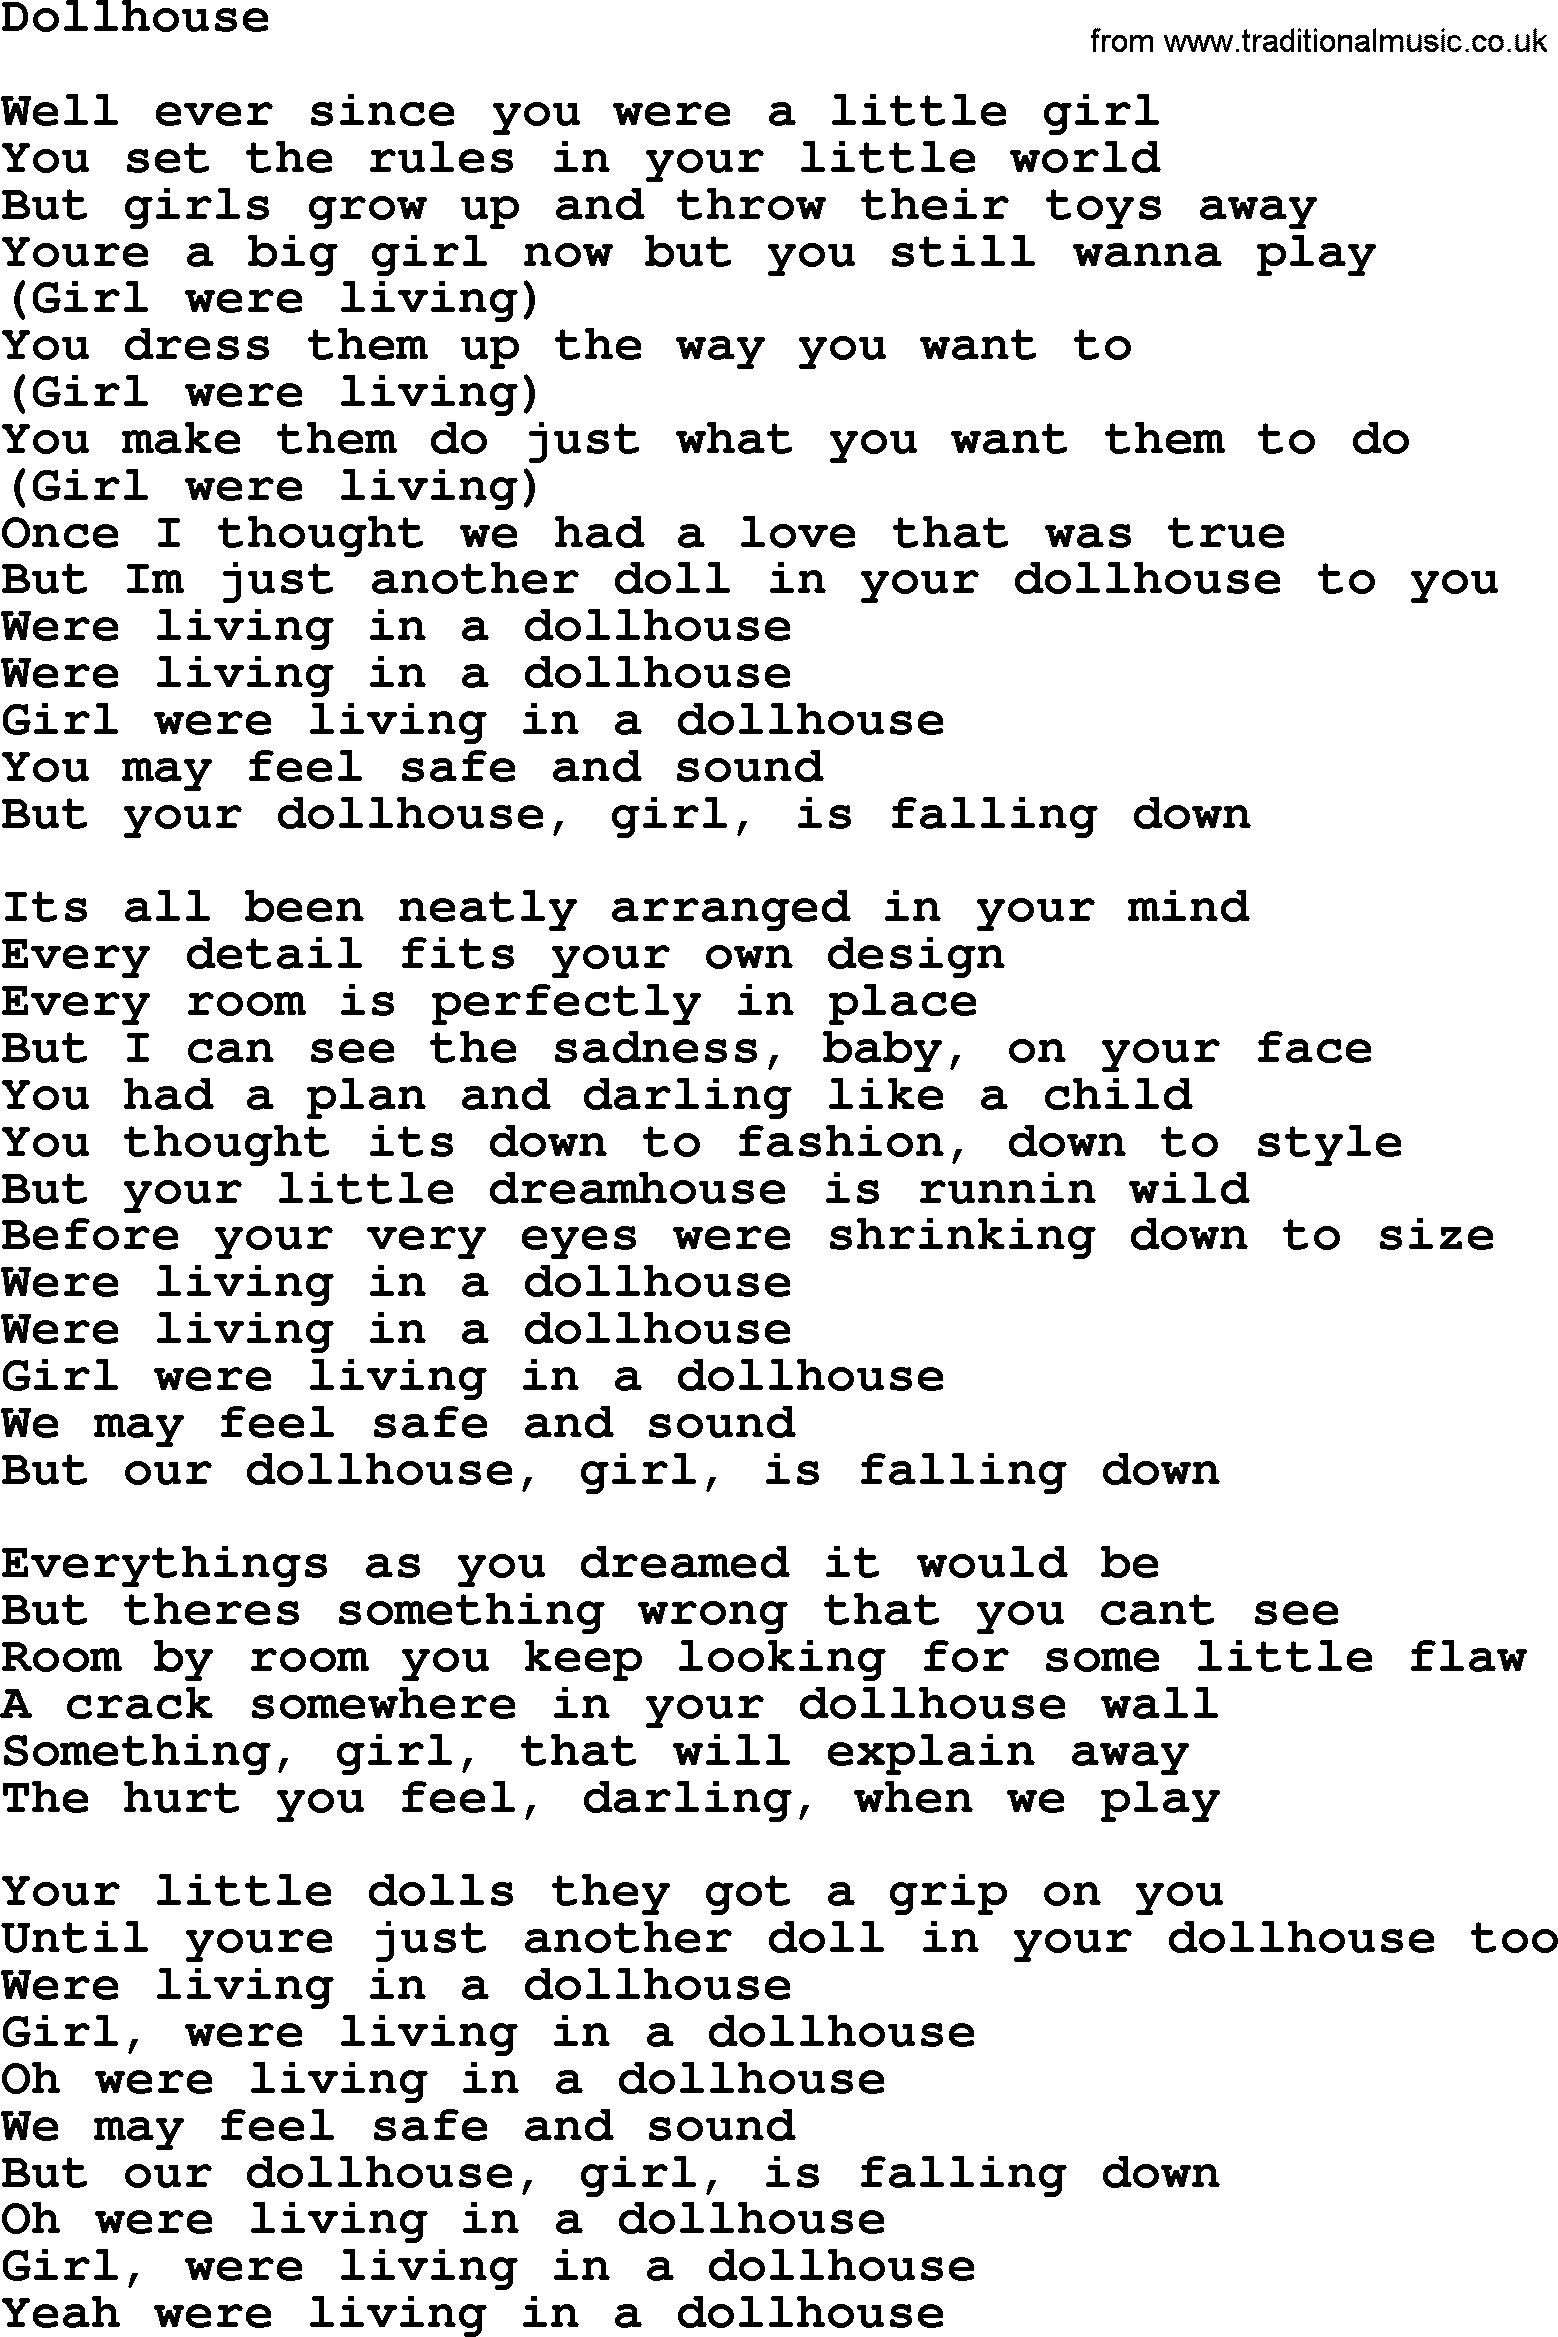 Bruce Springsteen song: Dollhouse lyrics